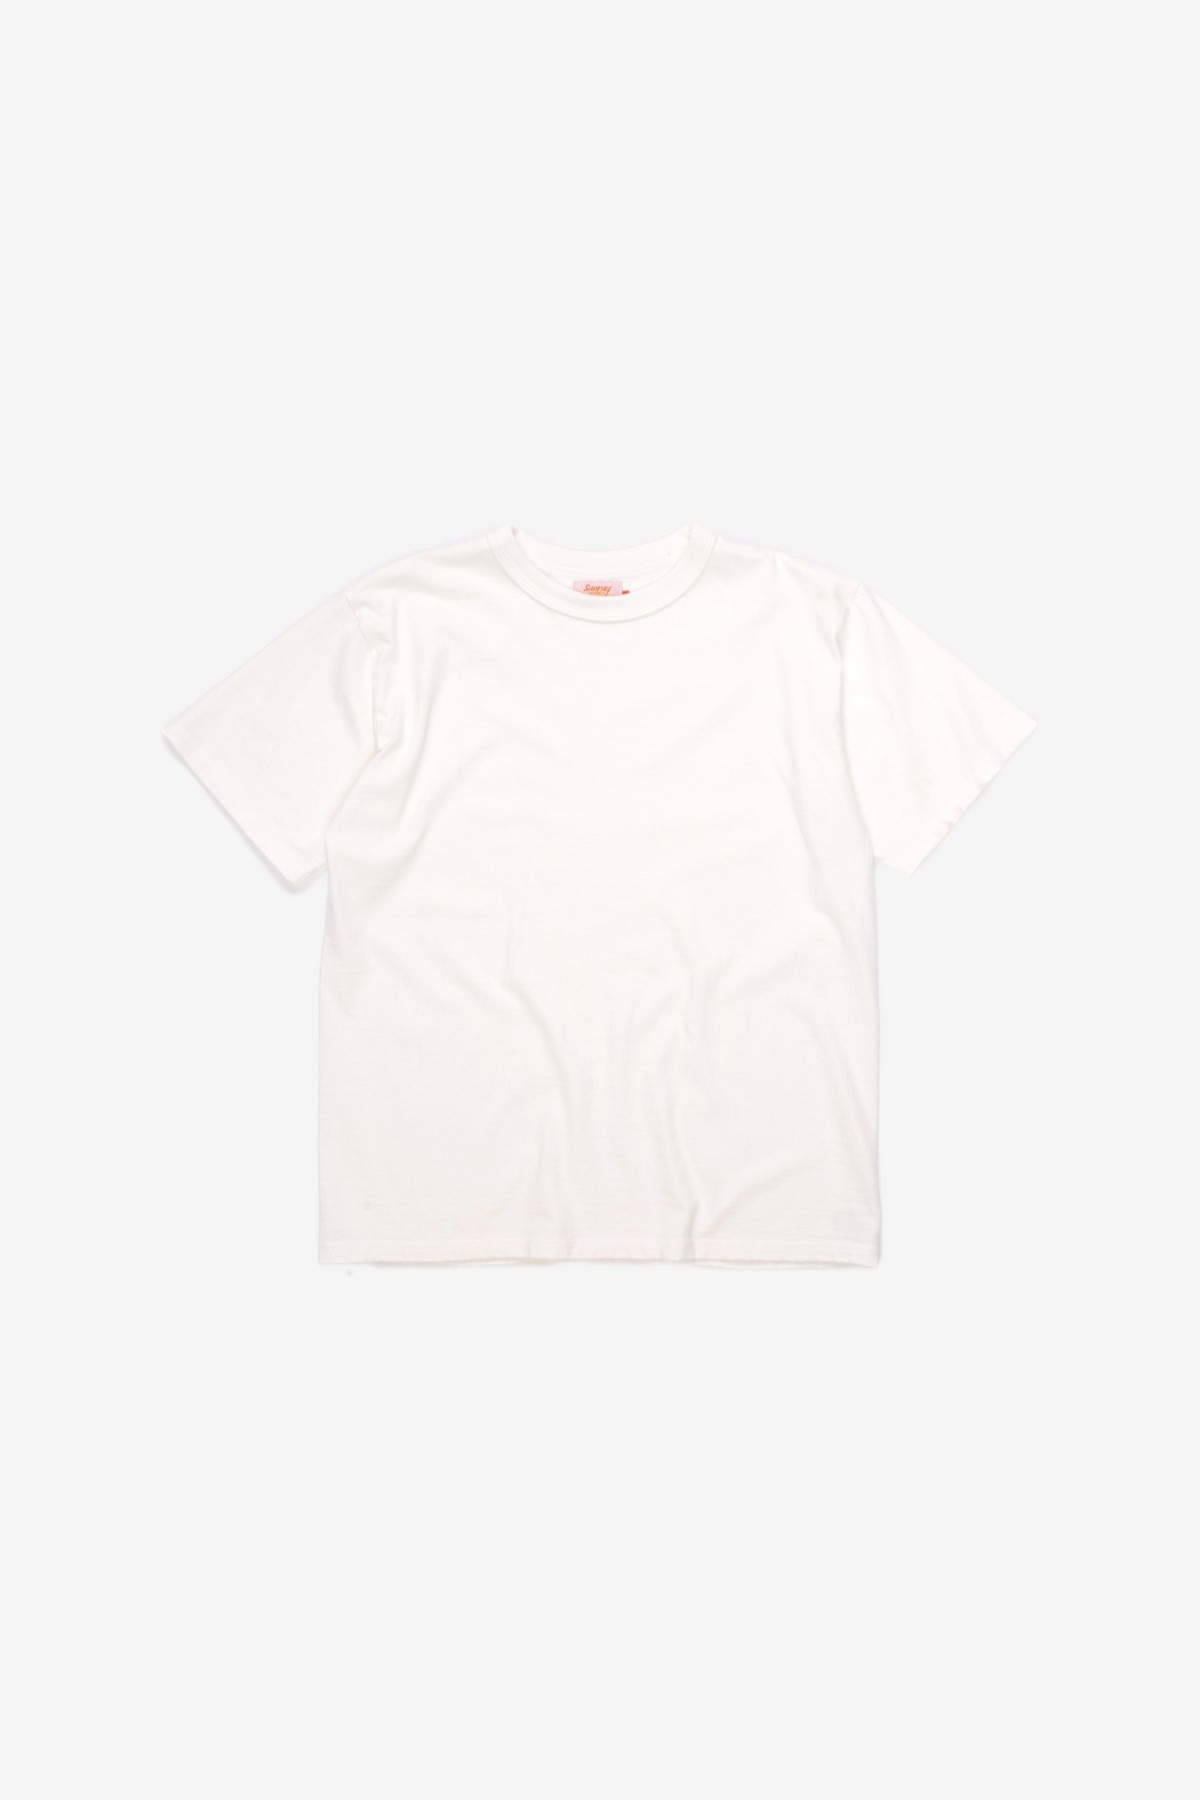 Sunray Sportswear Makaha Short Sleeve T-Shirt in Off White